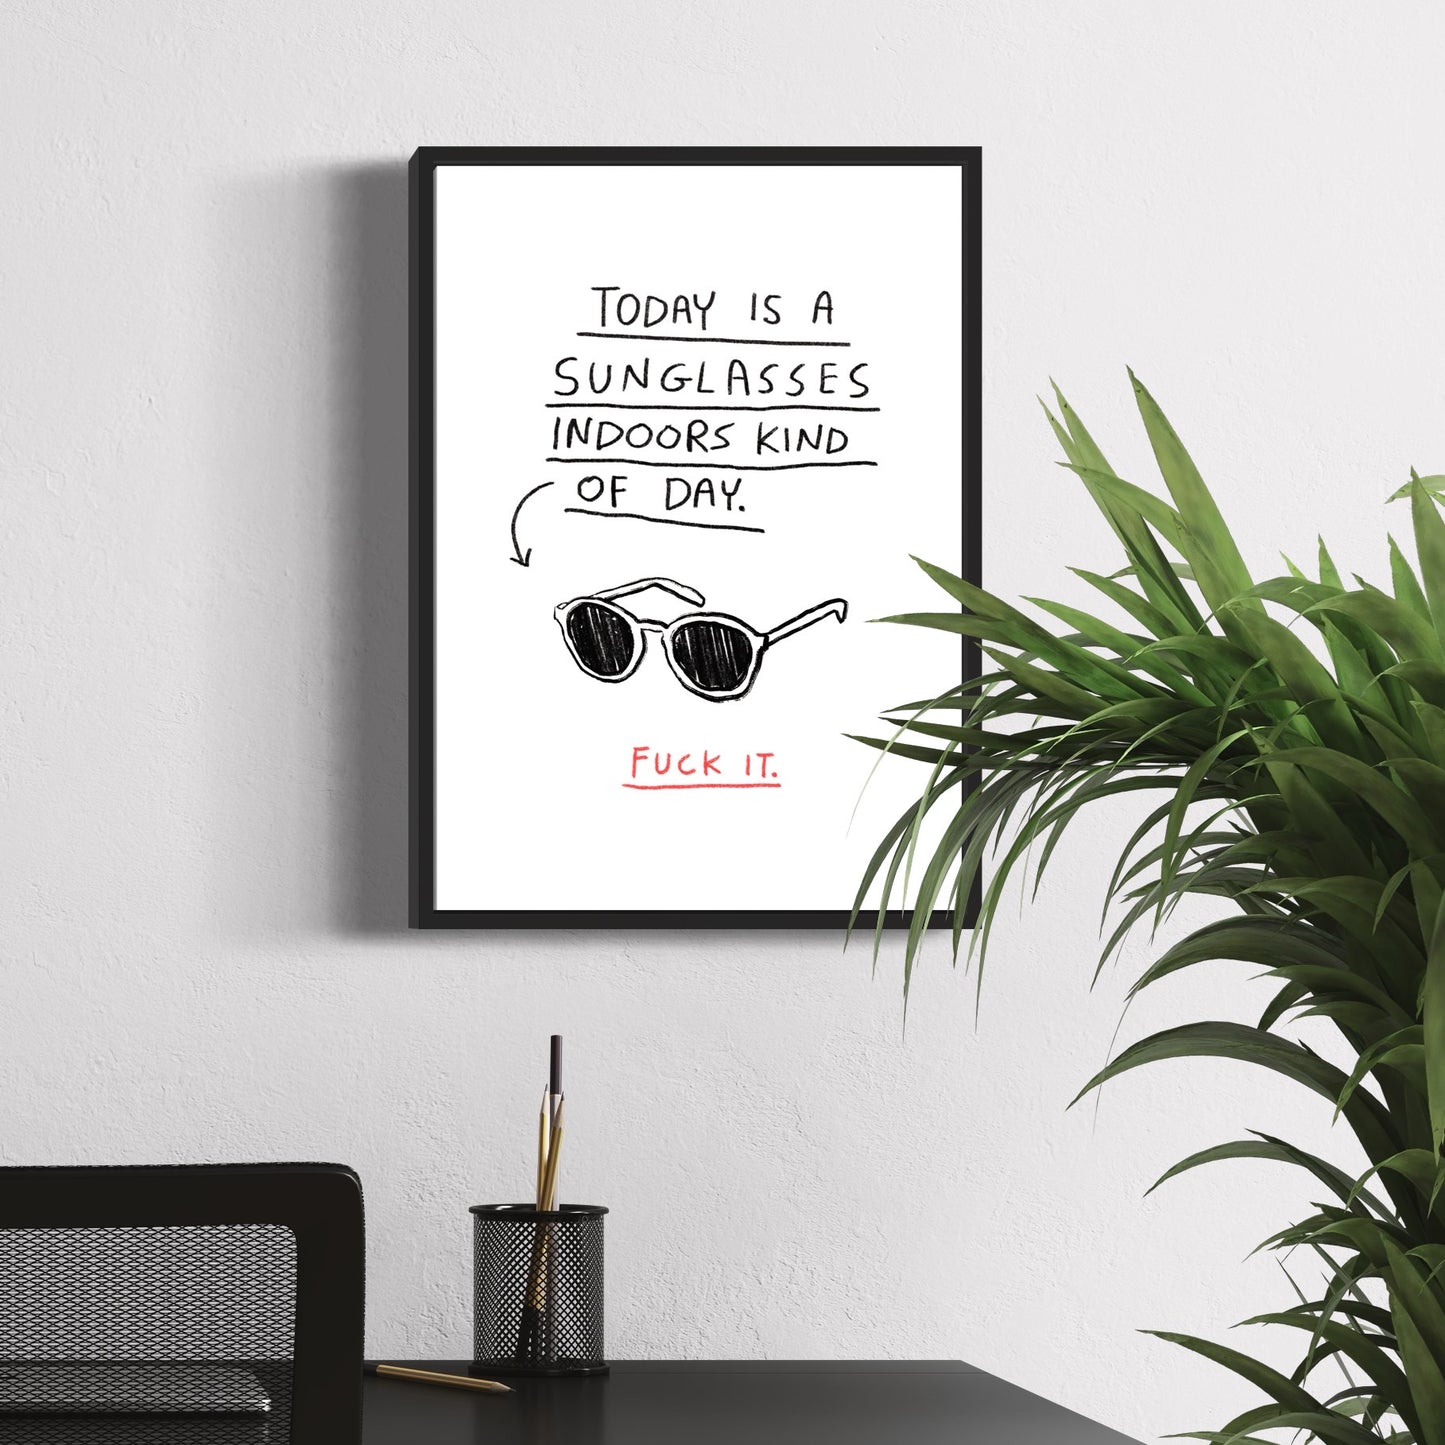 Sunglasses Indoors print